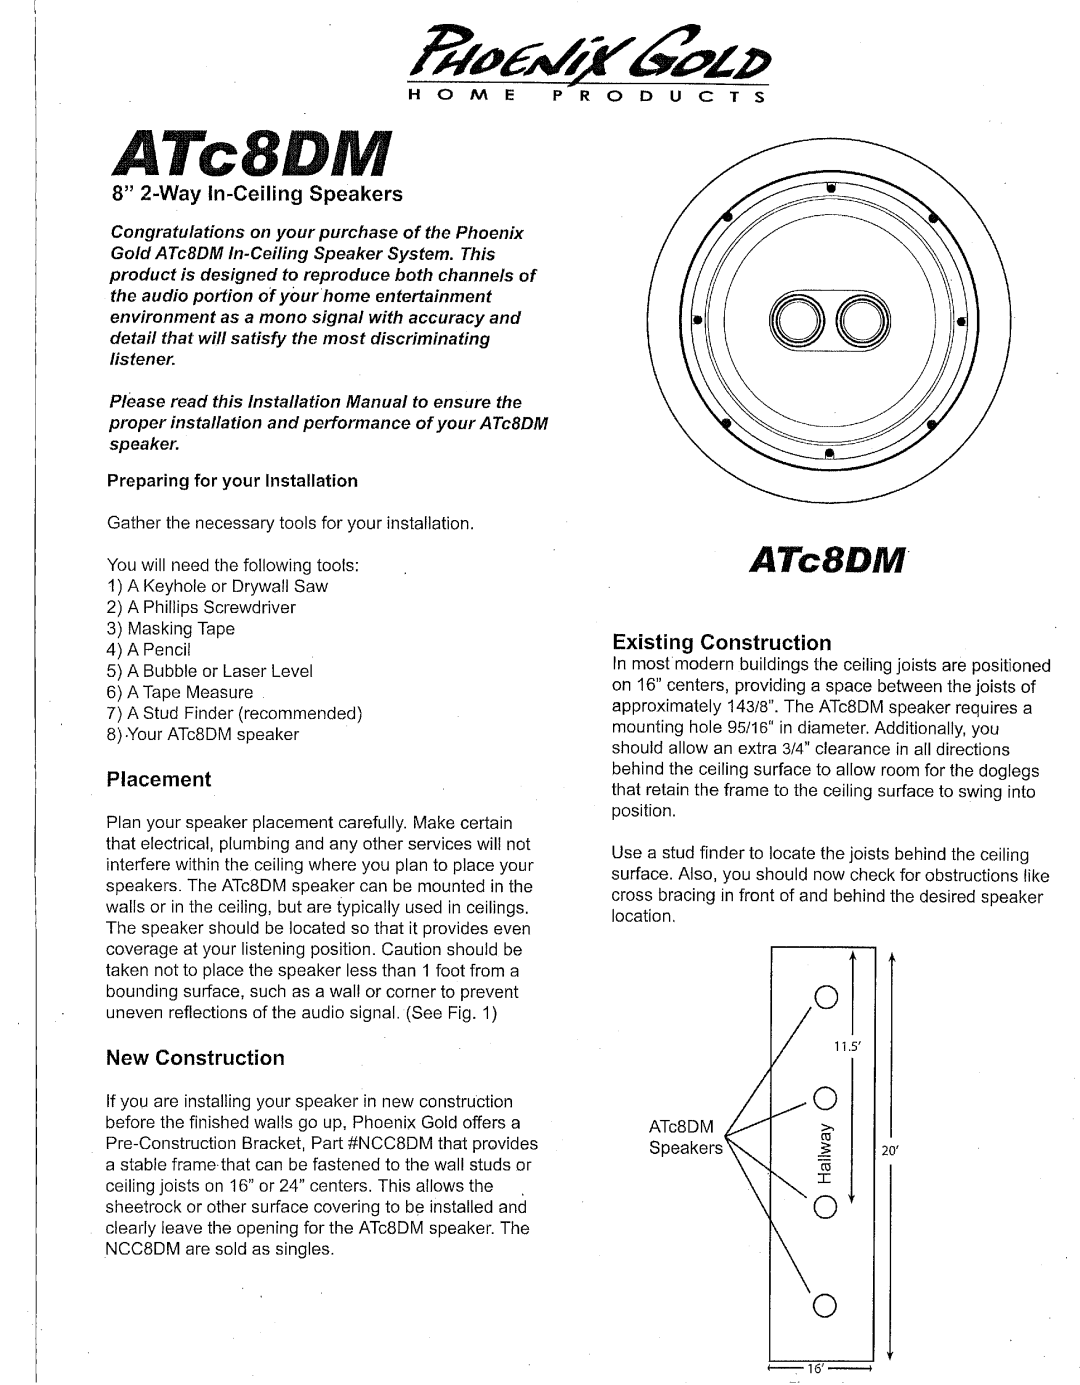 Phoenix Gold 8" 2-Way In-Ceiling Speakers, ATc8 manual 